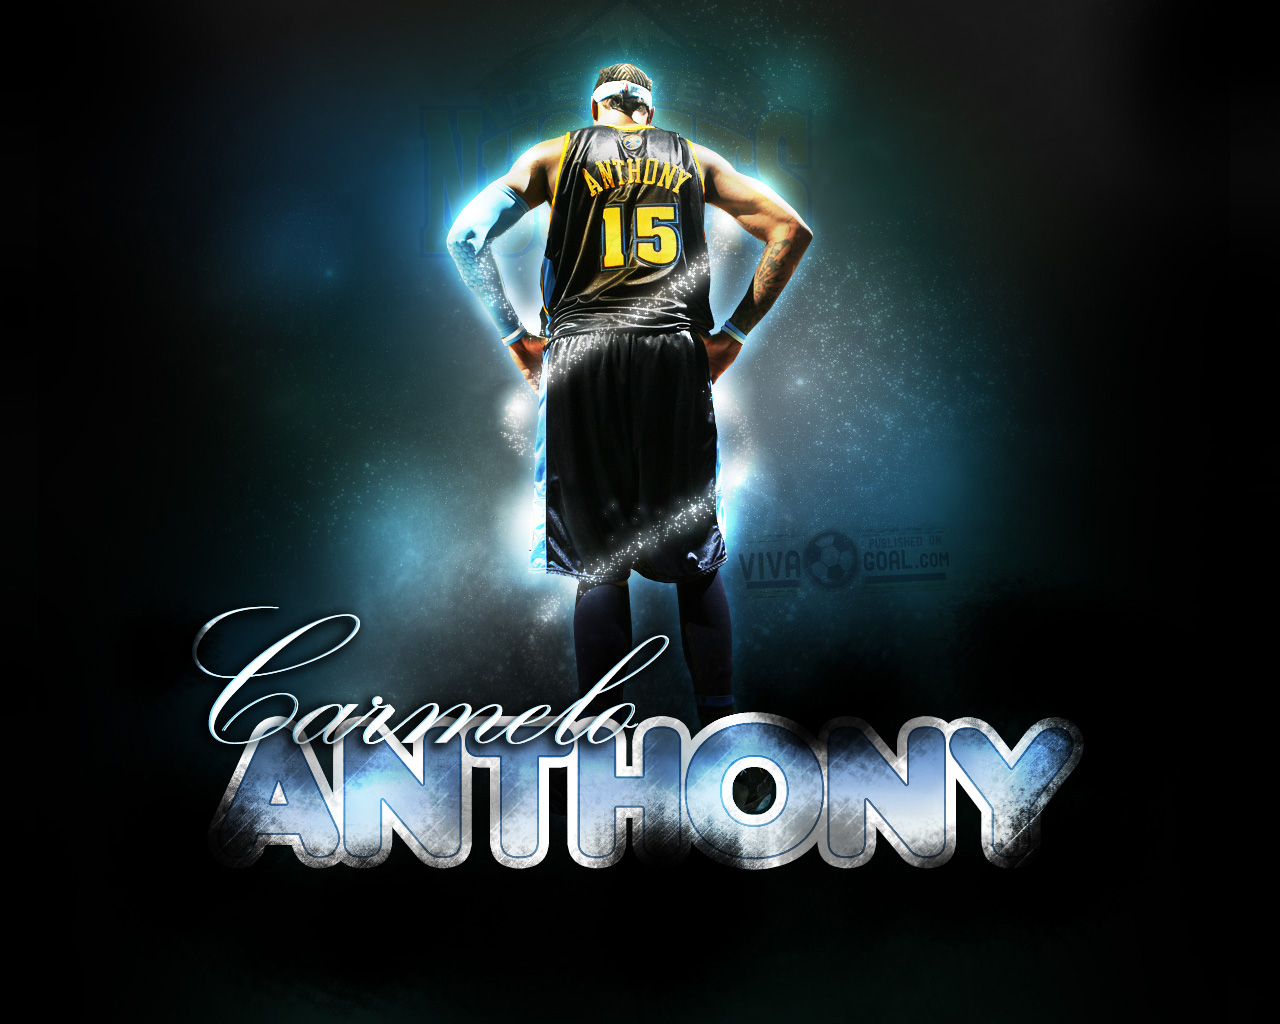 Carmelo Anthony Basketball Wallpaper Nba